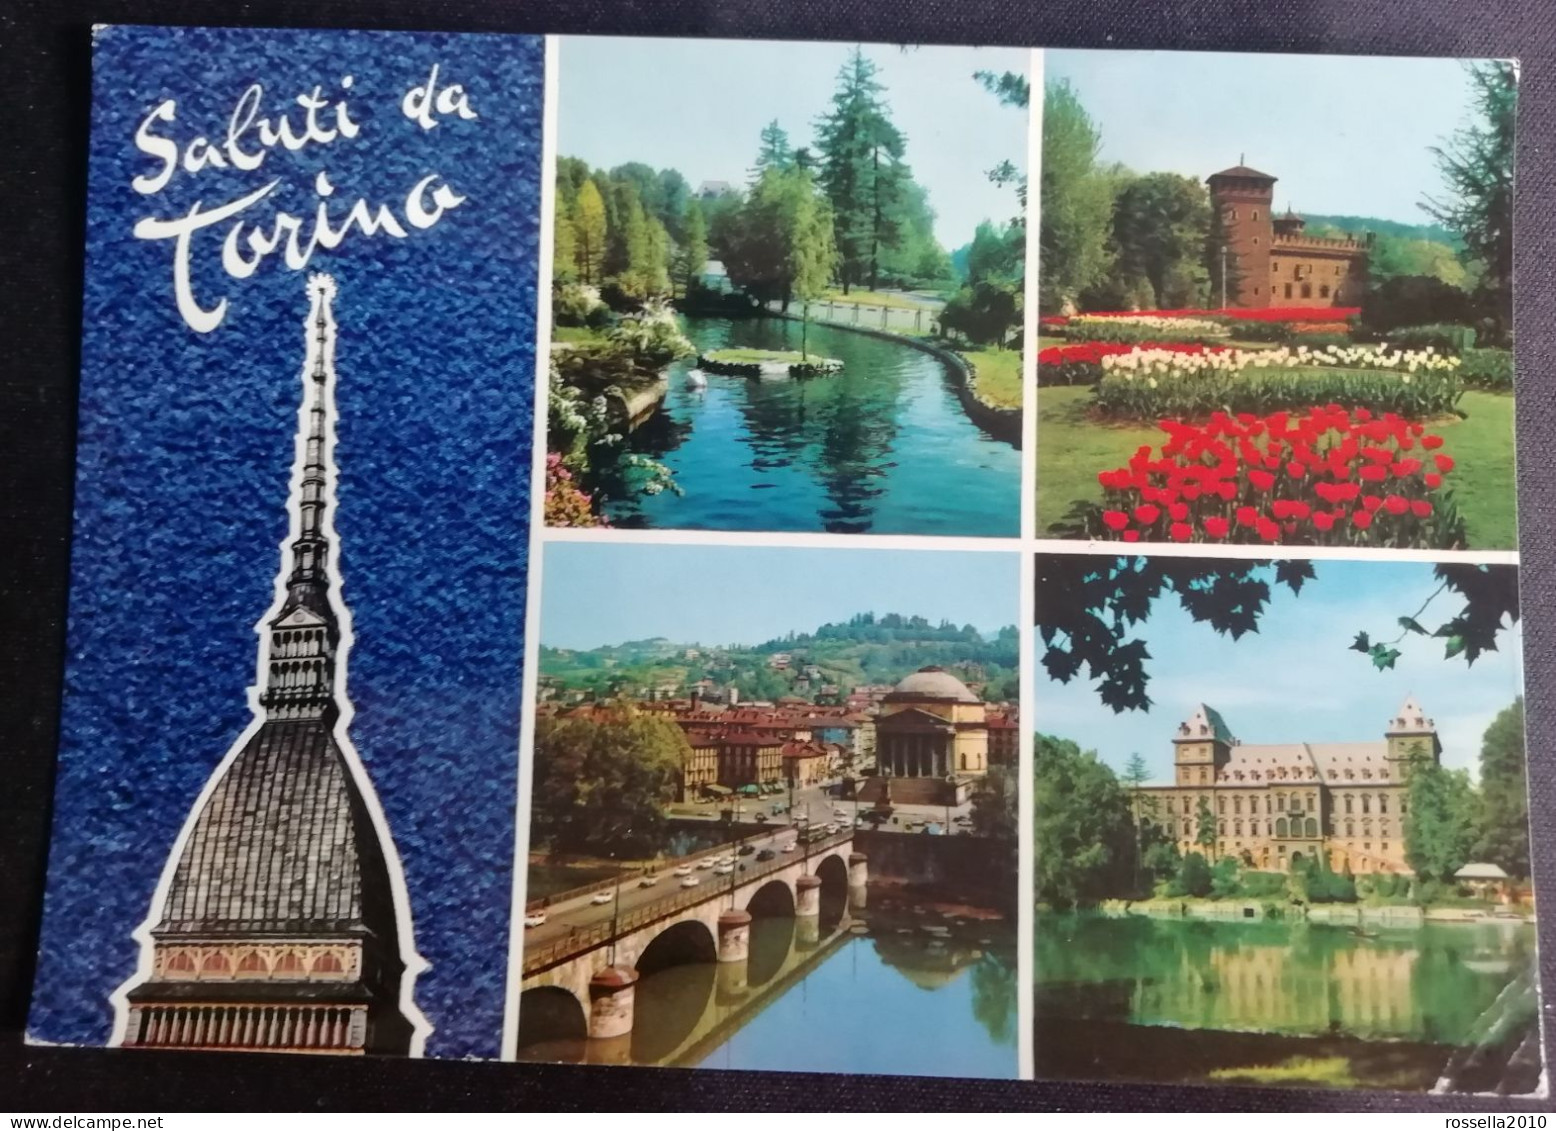 LOTTO 3 CARTOLINE ITALIA TORINO Italy Postcards Set ITALIEN Ansichtskarten - Autres Monuments, édifices